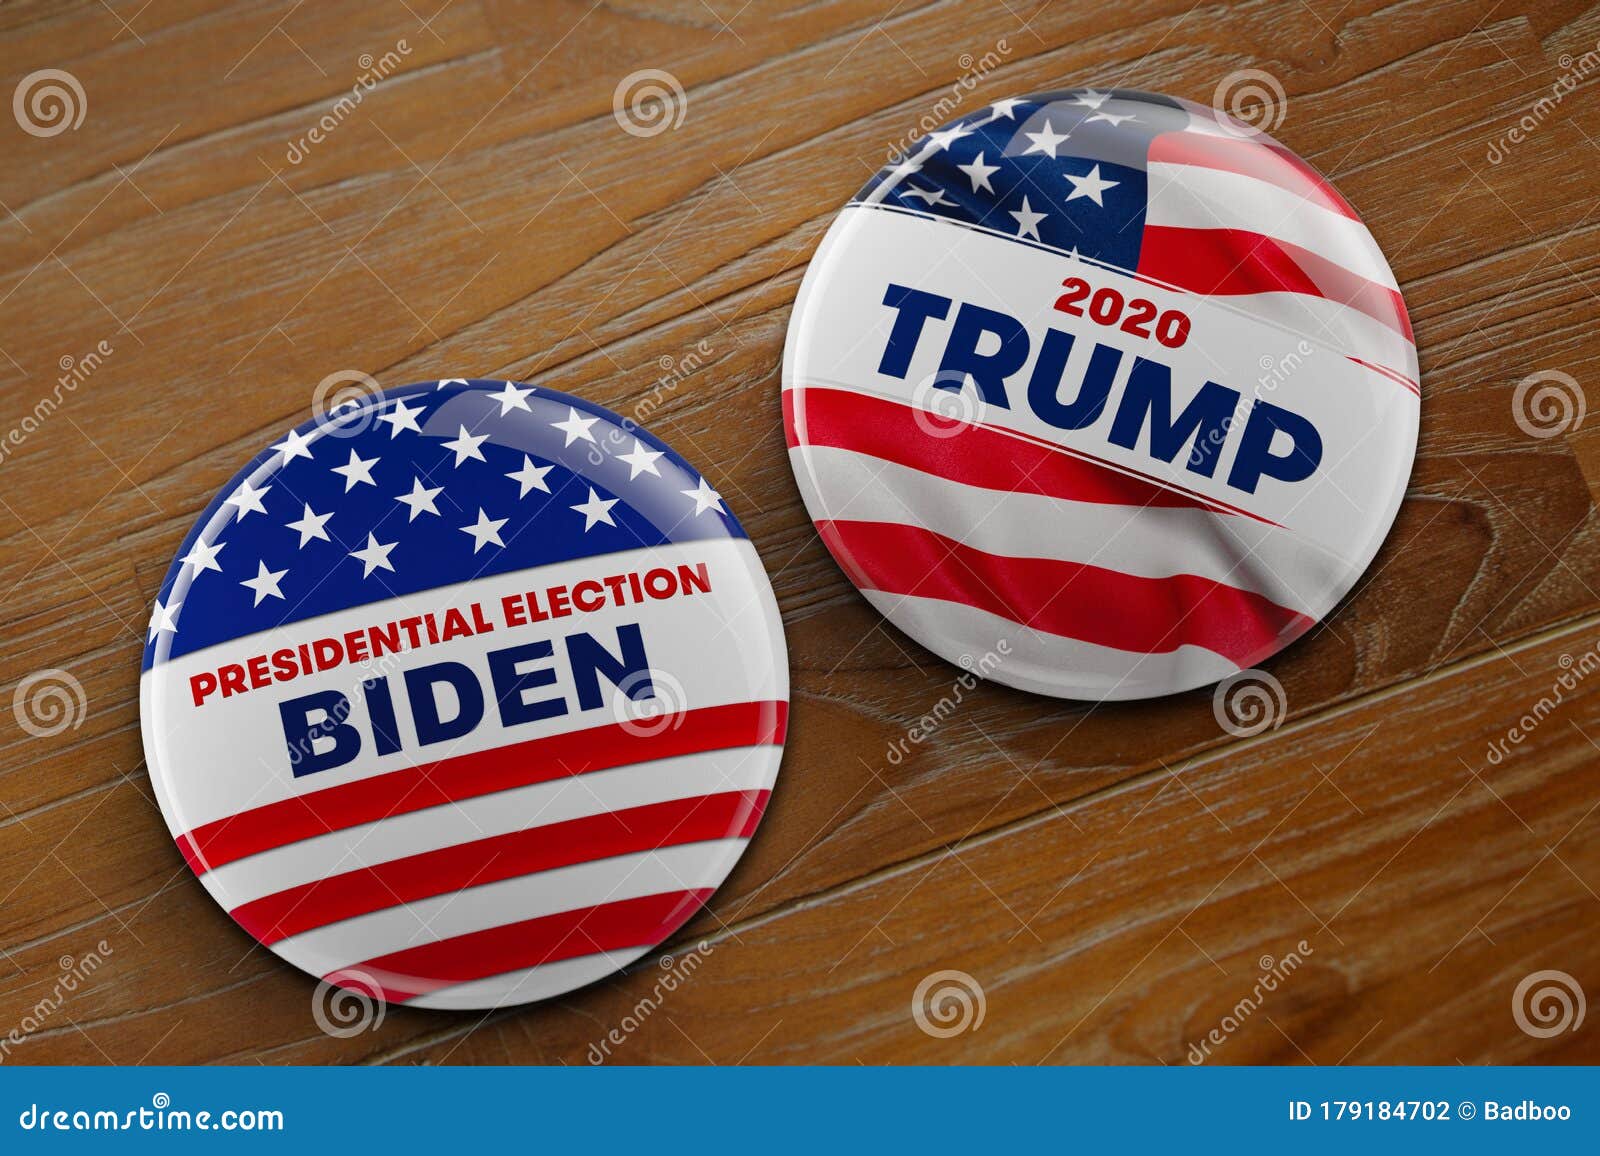 JOE BIDEN buttons badge pin 2020 Donald Trump democrat president democratic